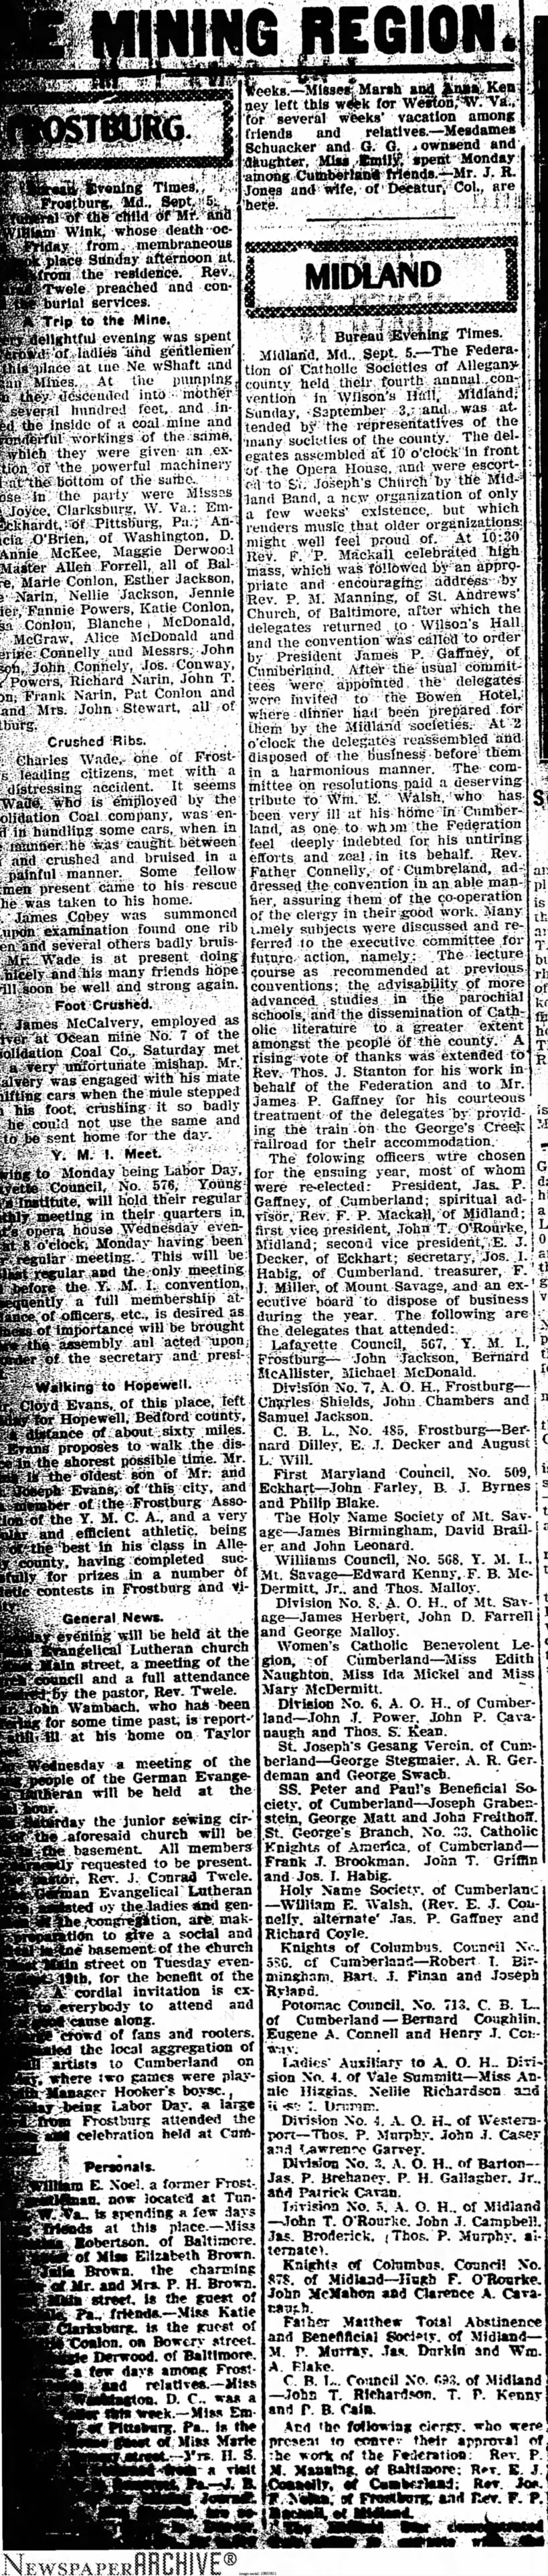 E. J. Decker Catholic Societies / Midlands 9/5/1905